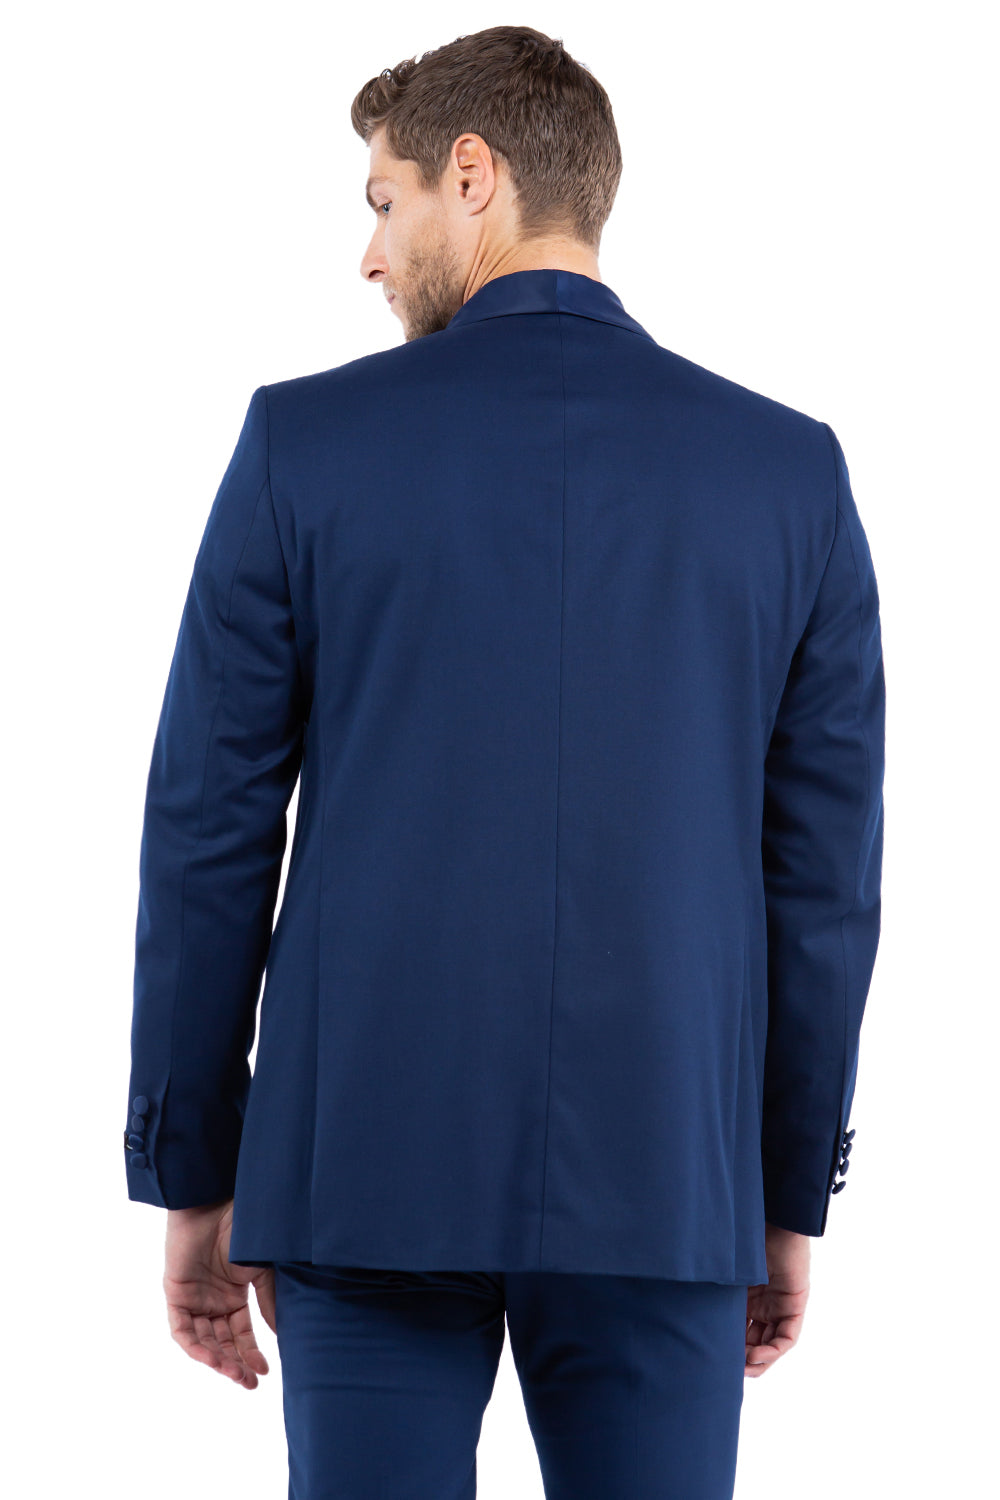 Chaqueta de esmoquin con cuello chal azul marino Zegarie para hombre MJT366-02